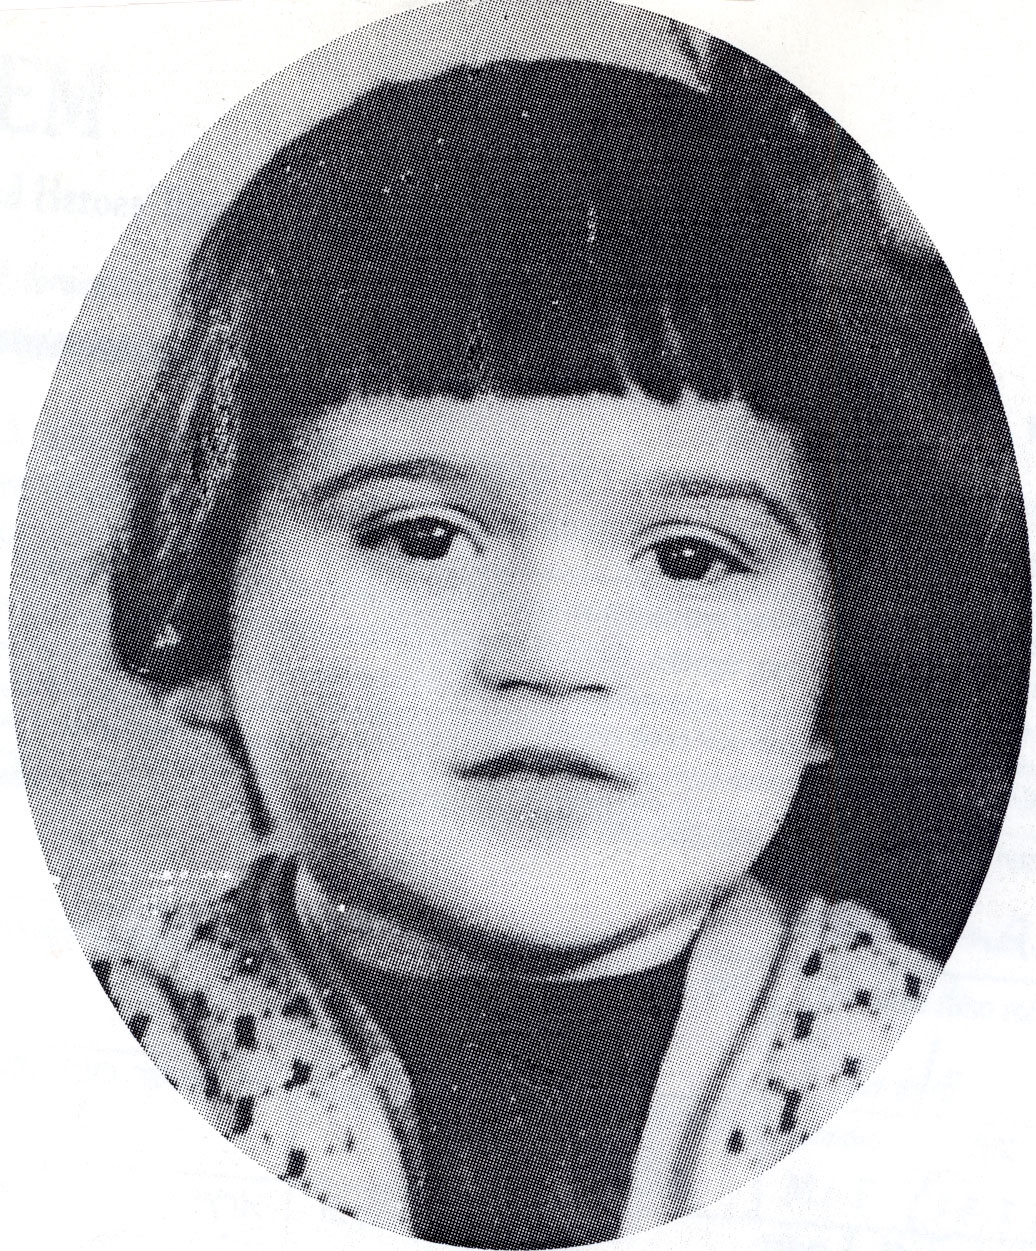 Frida Gildman was born in Kiev, Ukraine, in 1936. She was murdered in September 1941 at Babi Yar.